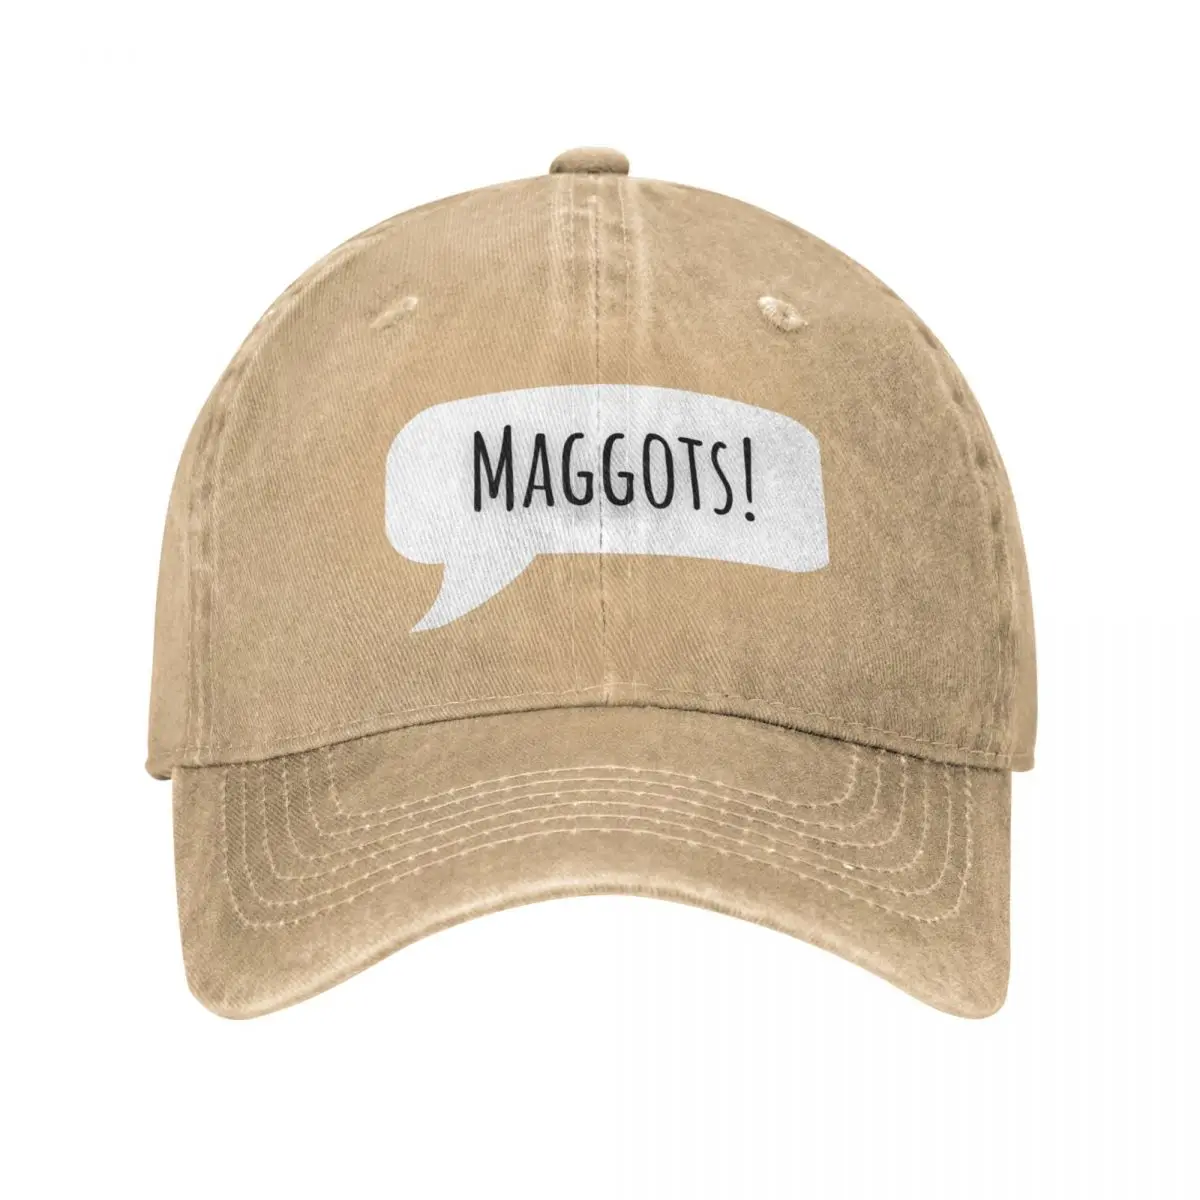 

Miss Trunchbull Maggots! Matilda QuoteCap Cowboy Hat sunhat bucket hat luxury brand Man hat Women's